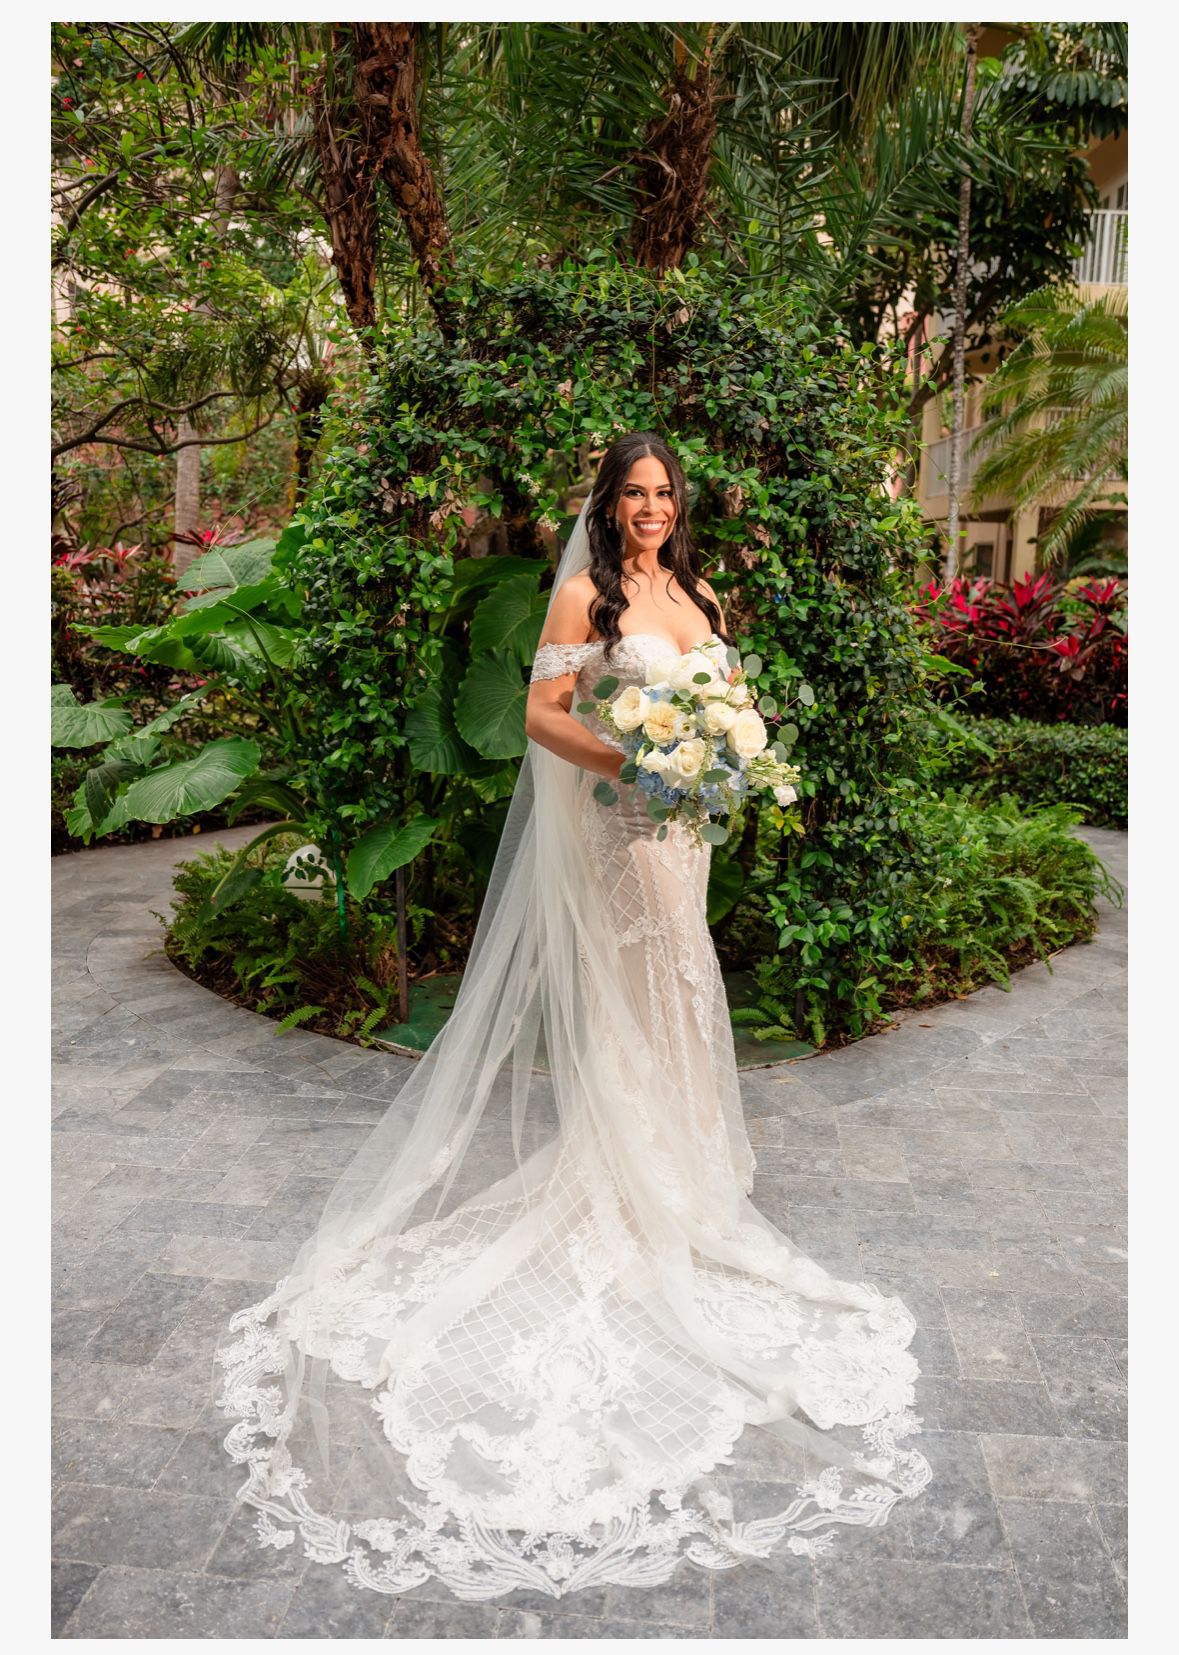 Oleg Cassini - Lace Wedding Dress & Veil